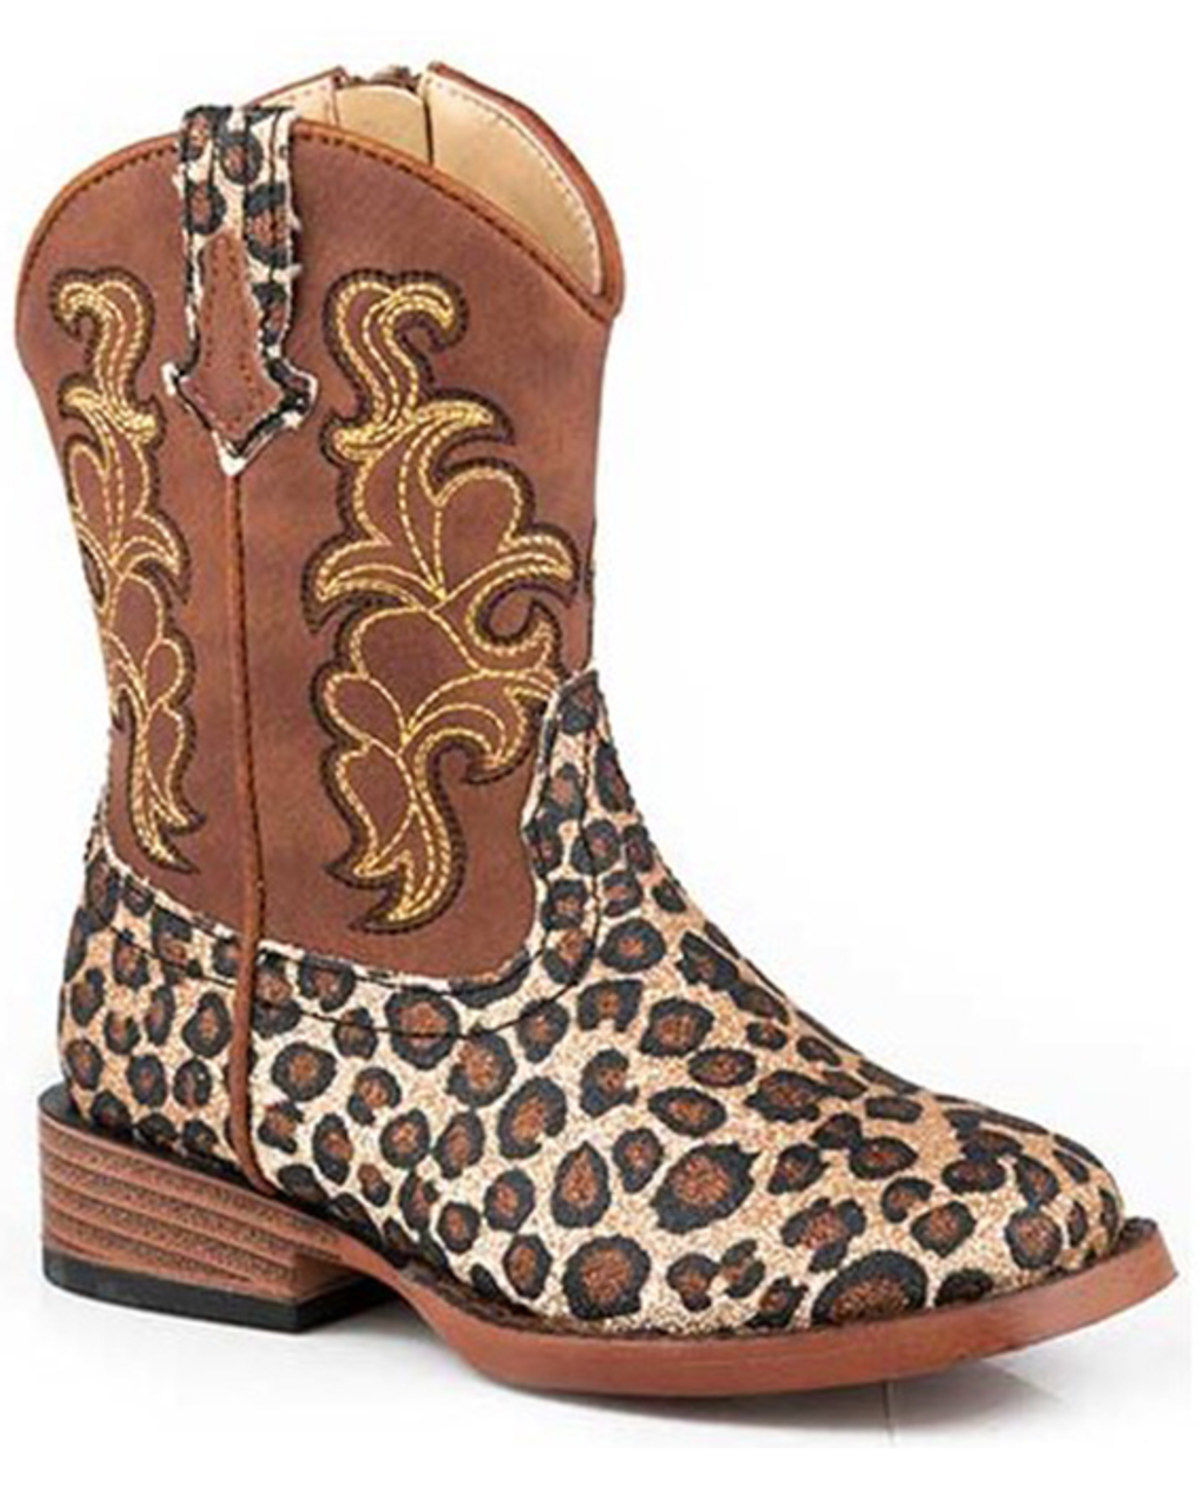 Roper Toddler Girls' Glitter Wild Cat Western Boots - Square Toe